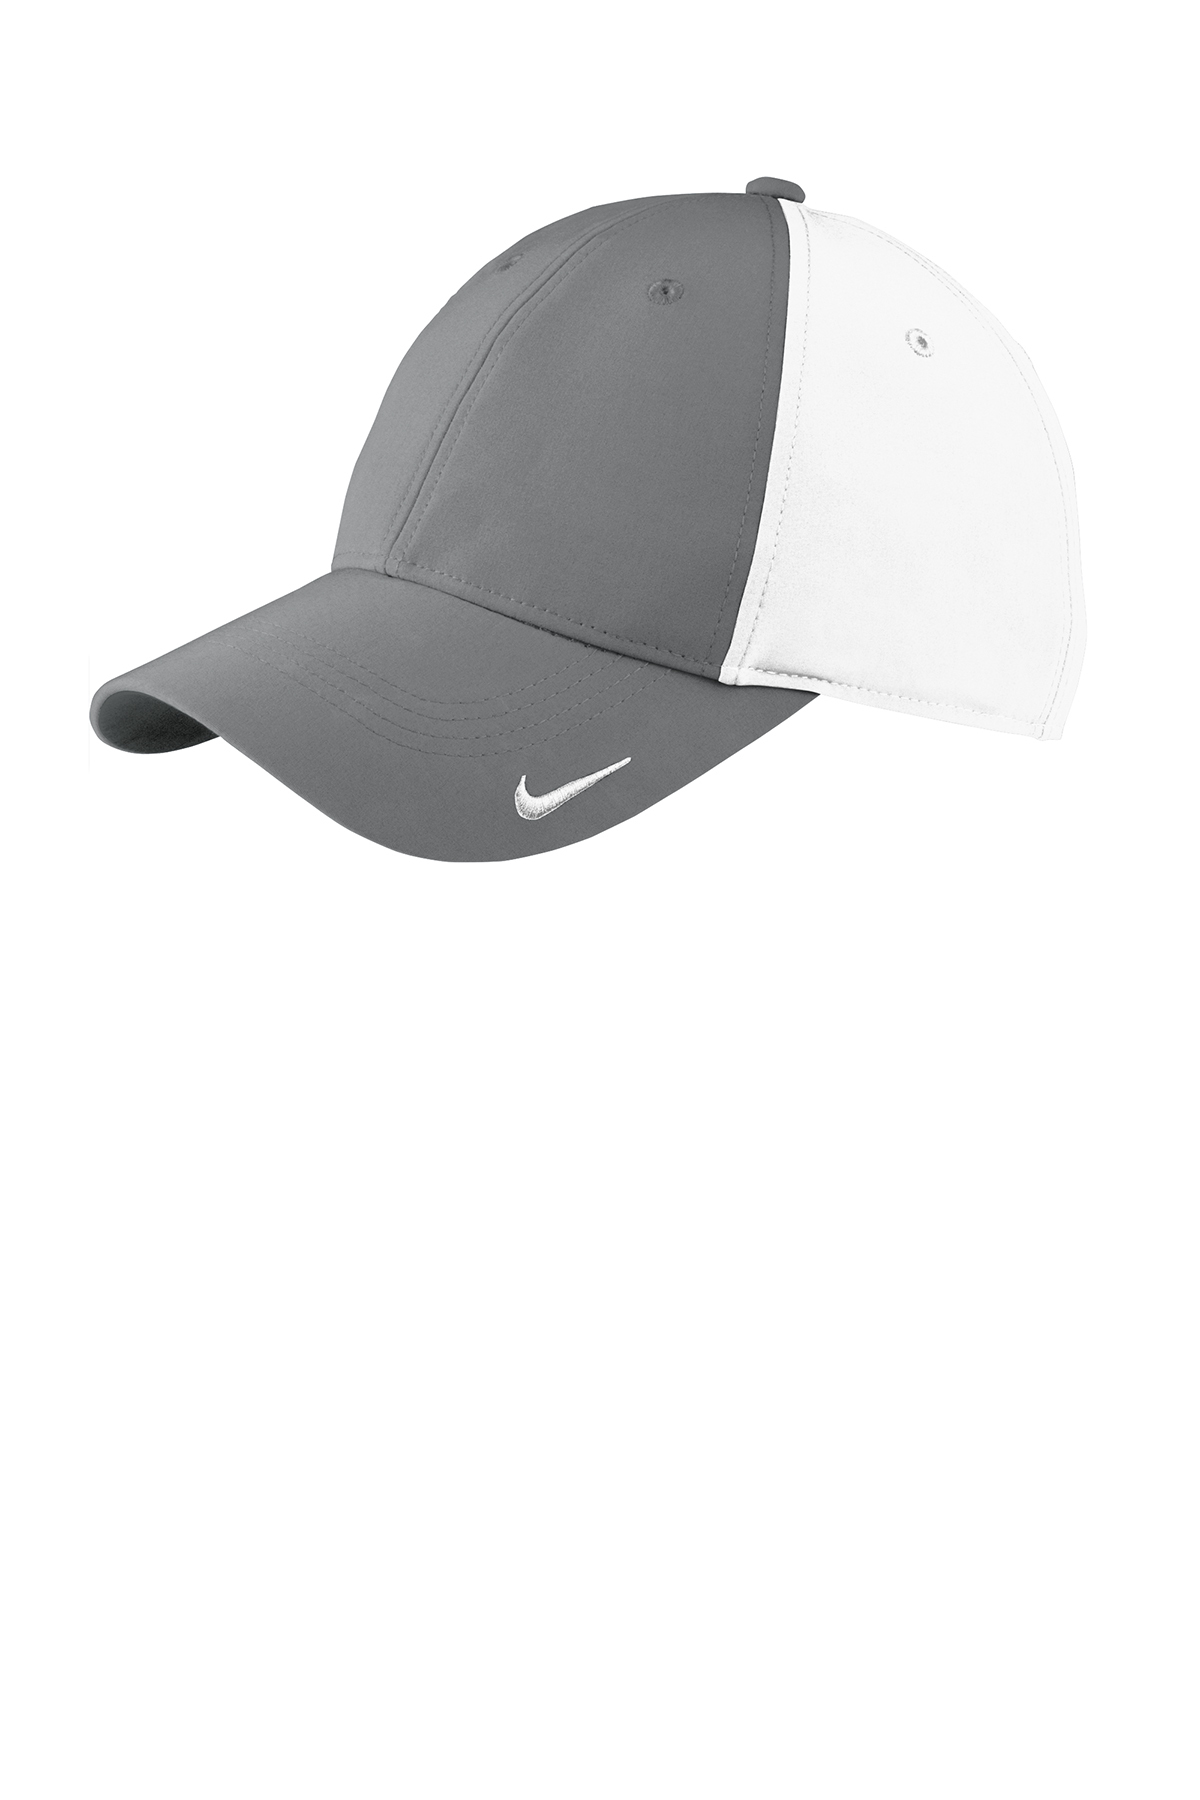 779797 Nike Golf Swoosh Legacy 91 Cap - From $19.44